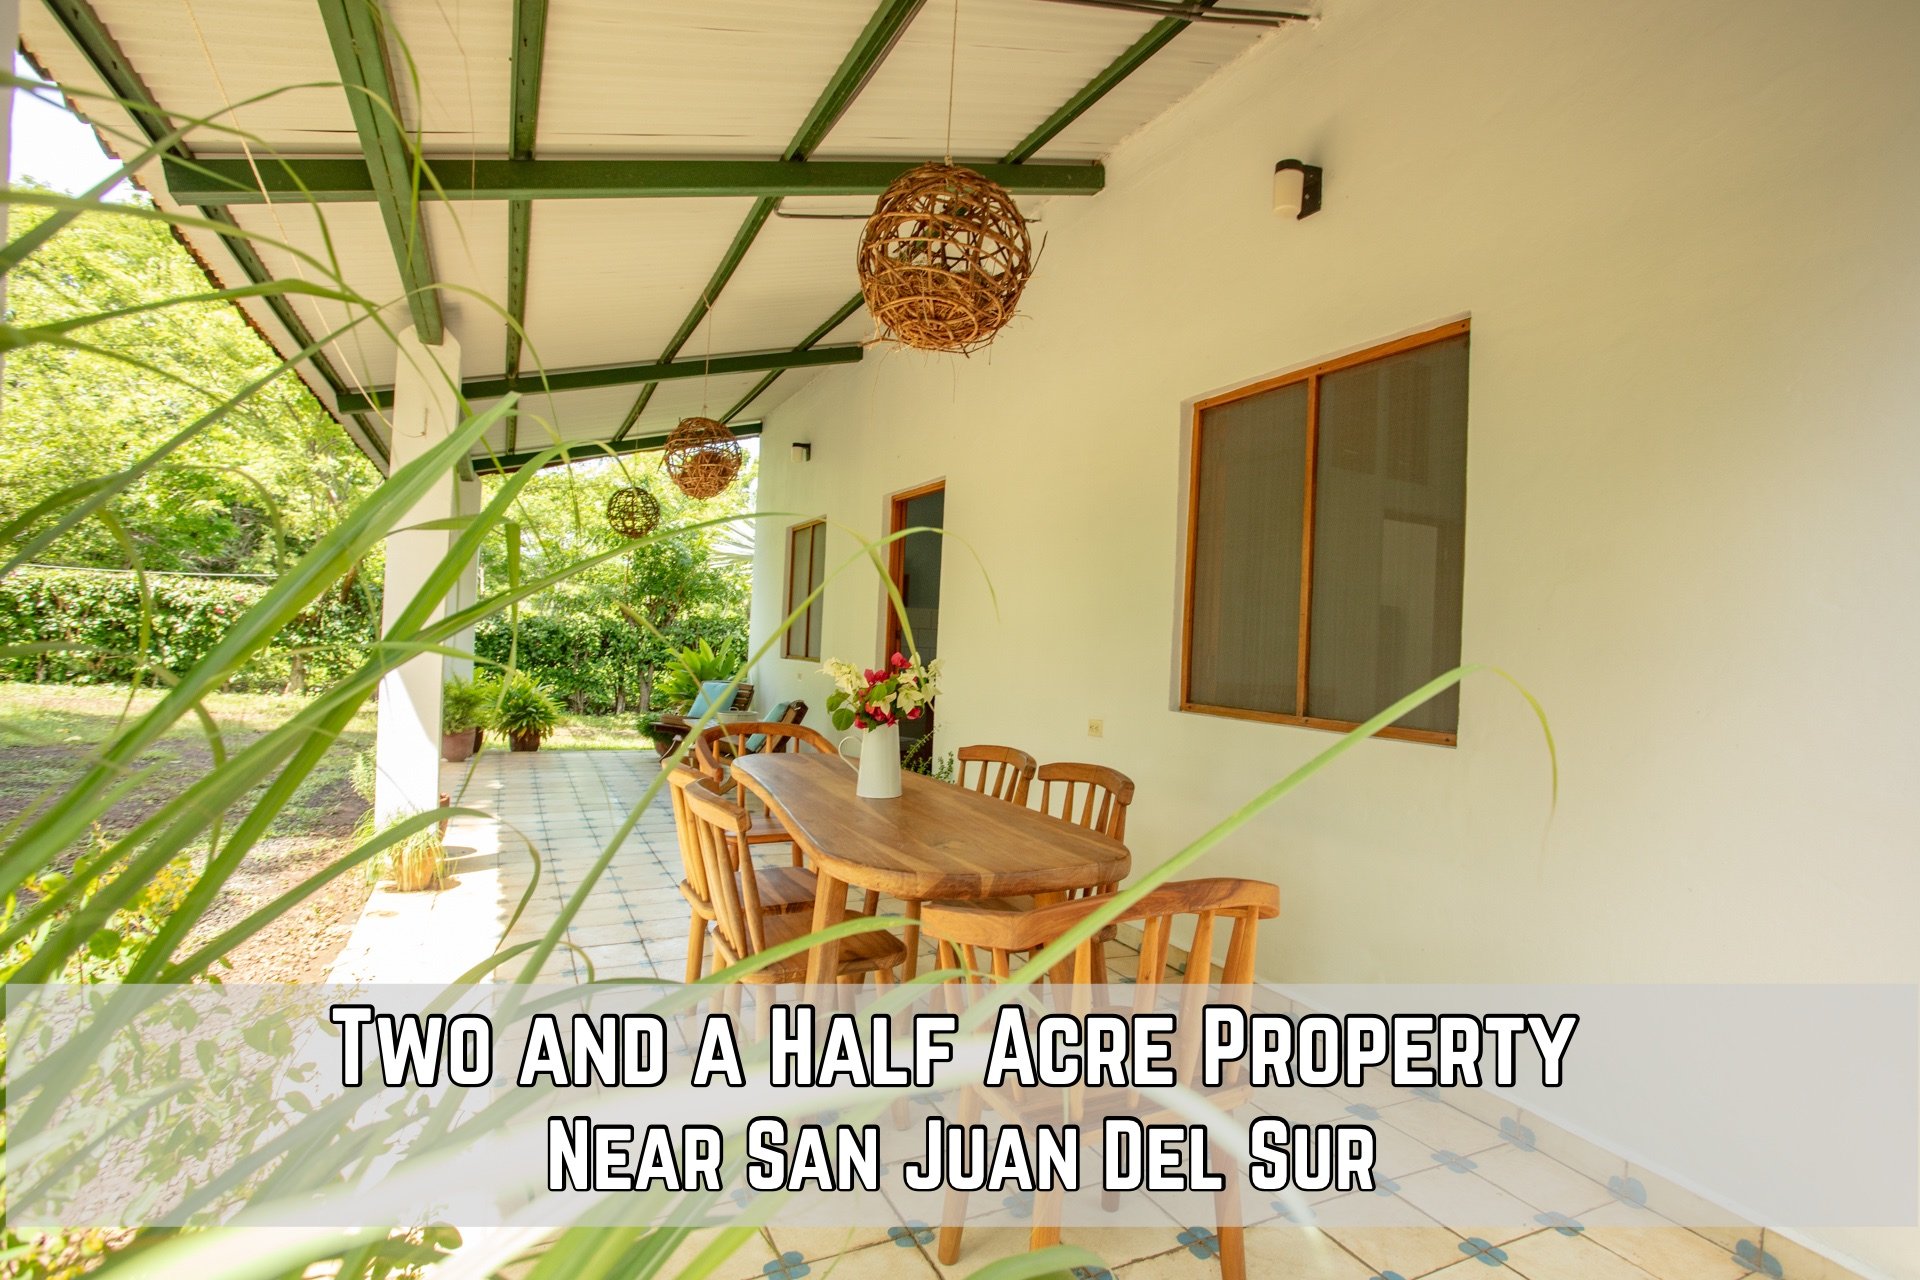 Acreage For Sale Nicaragua 2022 Property Real Estate 1-2.jpg